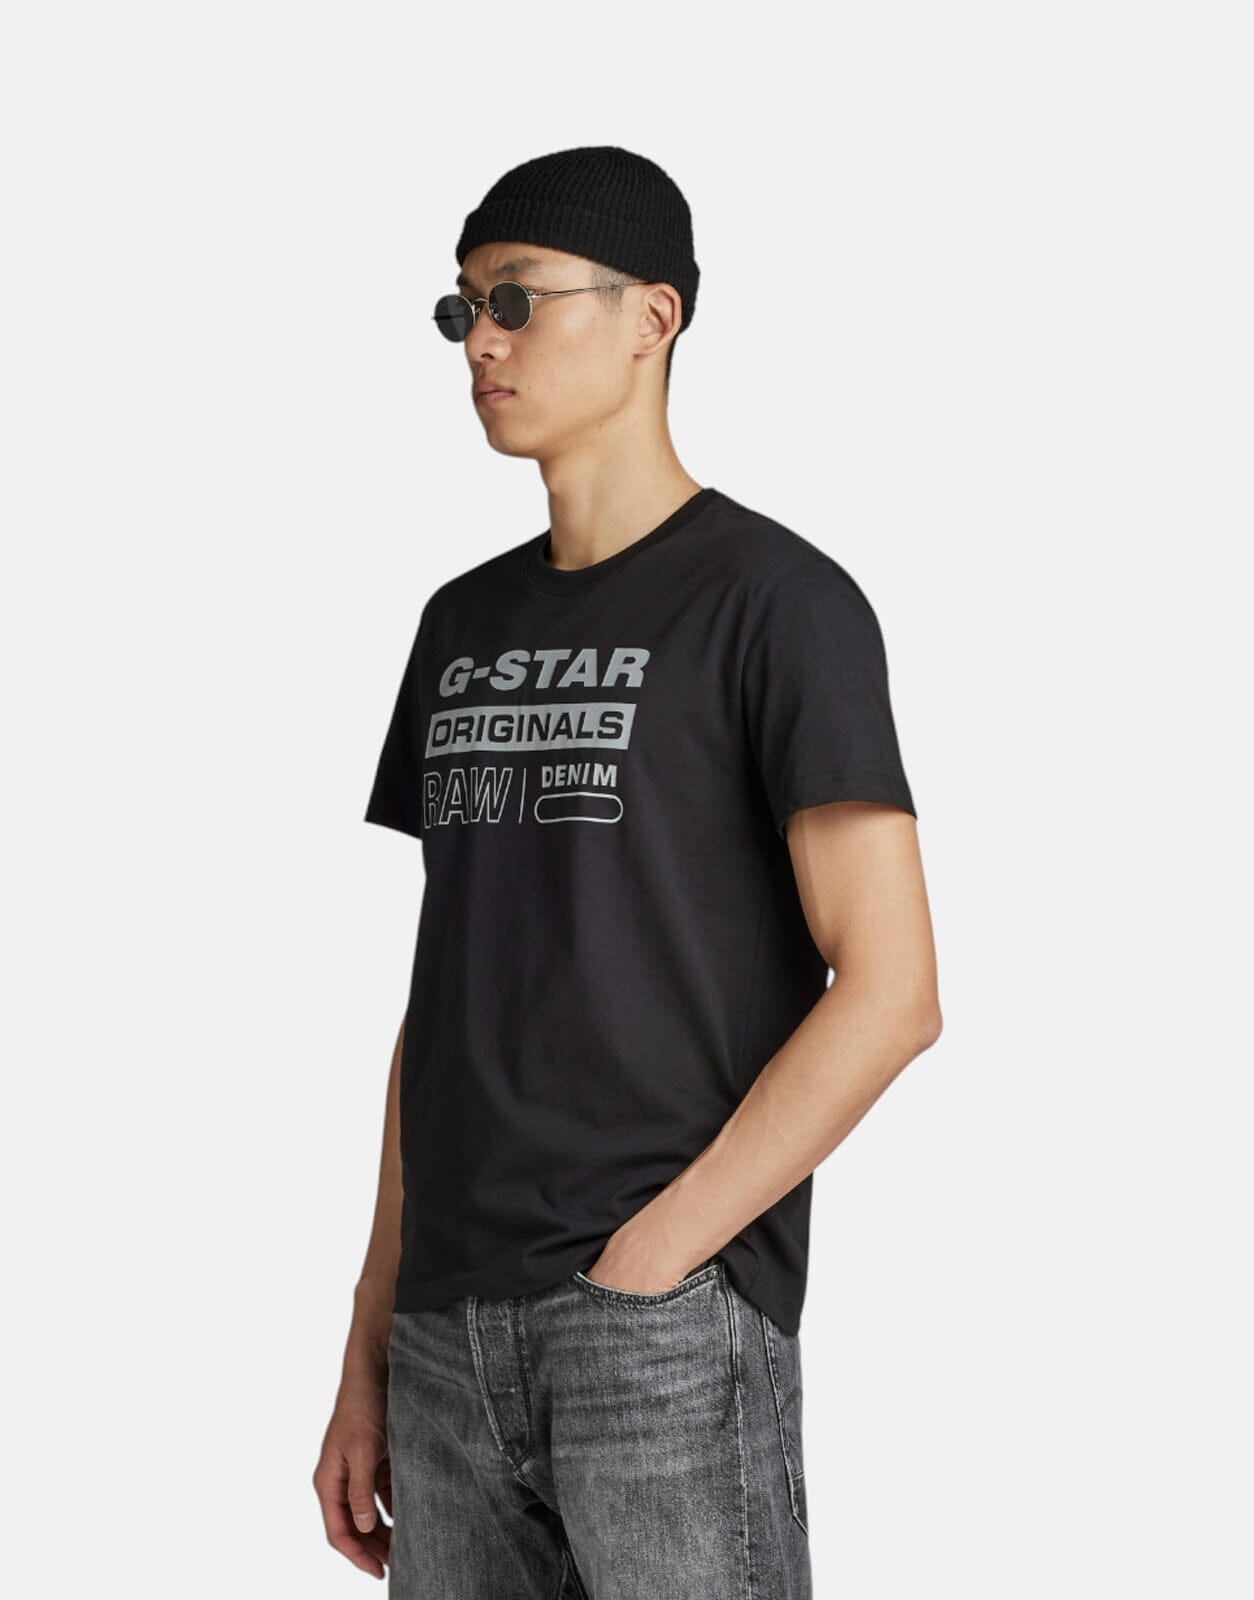 G-Star RAW Reflective Originals T-Shirt Dk Black - Subwear